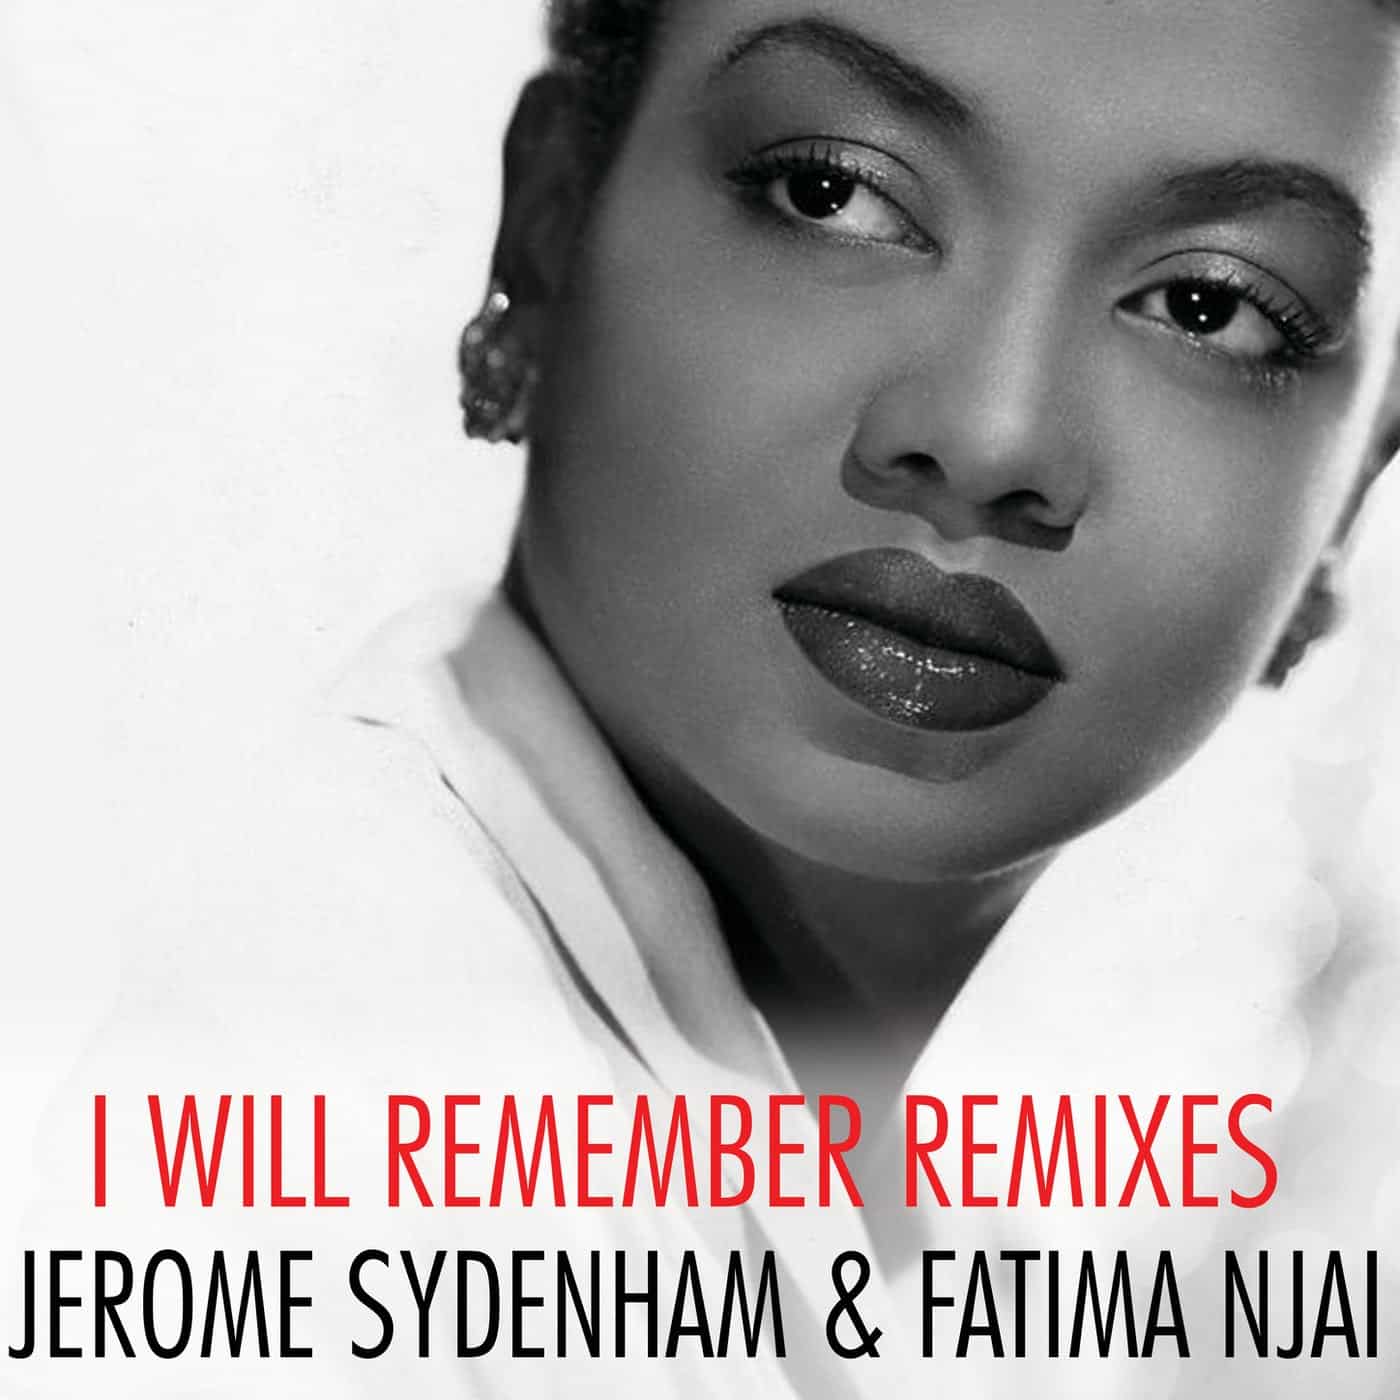 Download Jerome Sydenham, Fatima Njai - I Will Remember on Electrobuzz